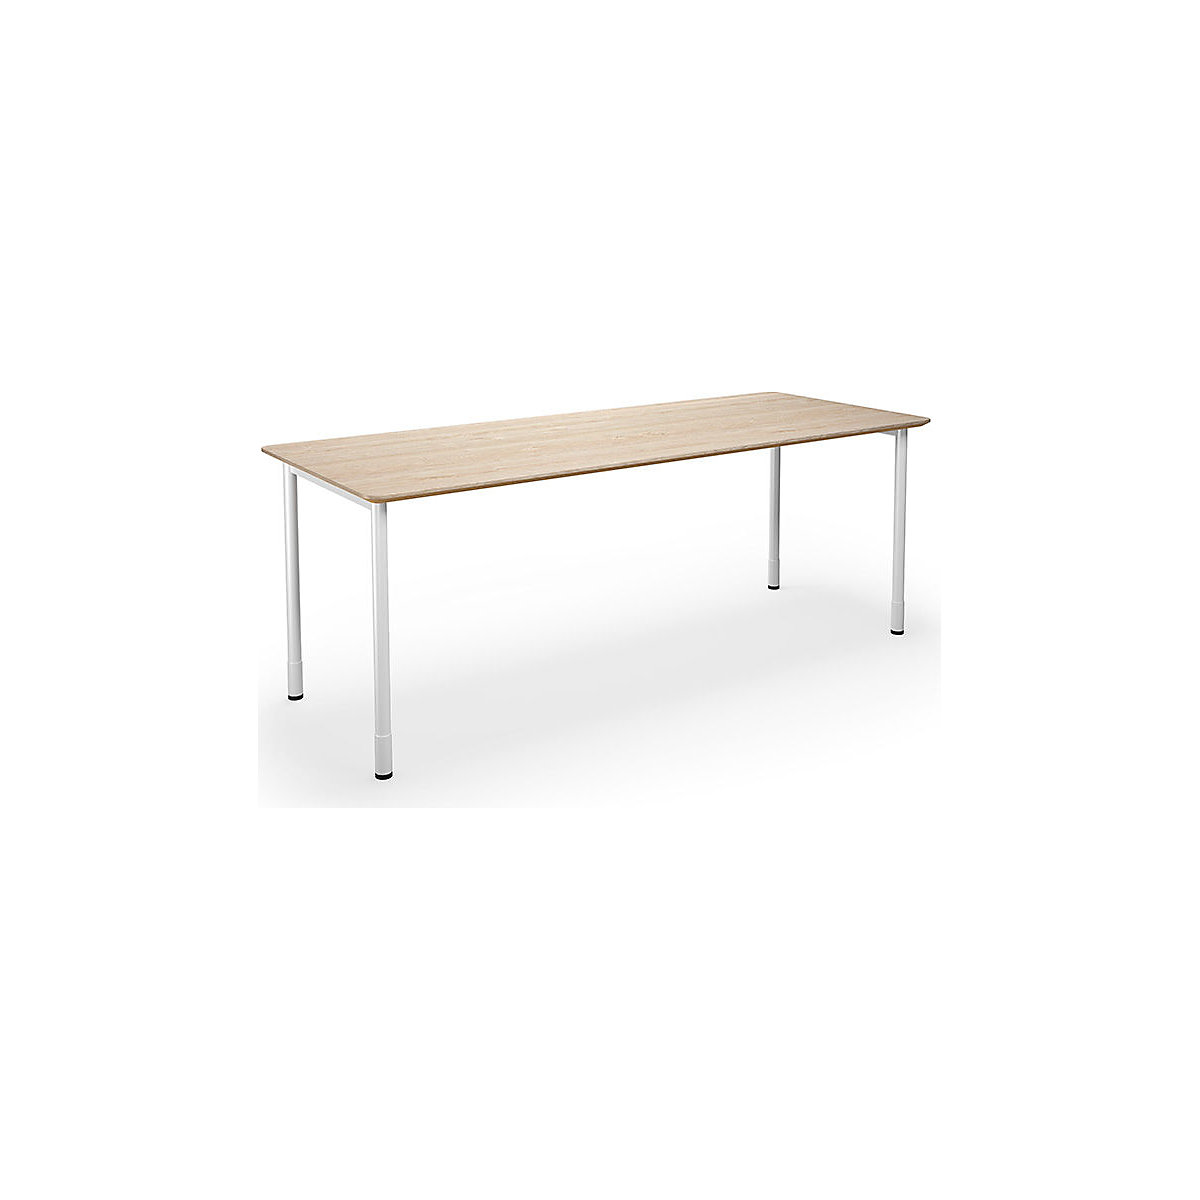 DUO-C Trend multi-purpose desk, straight tabletop, rounded corners, WxD 1800 x 800 mm, oak, white-3